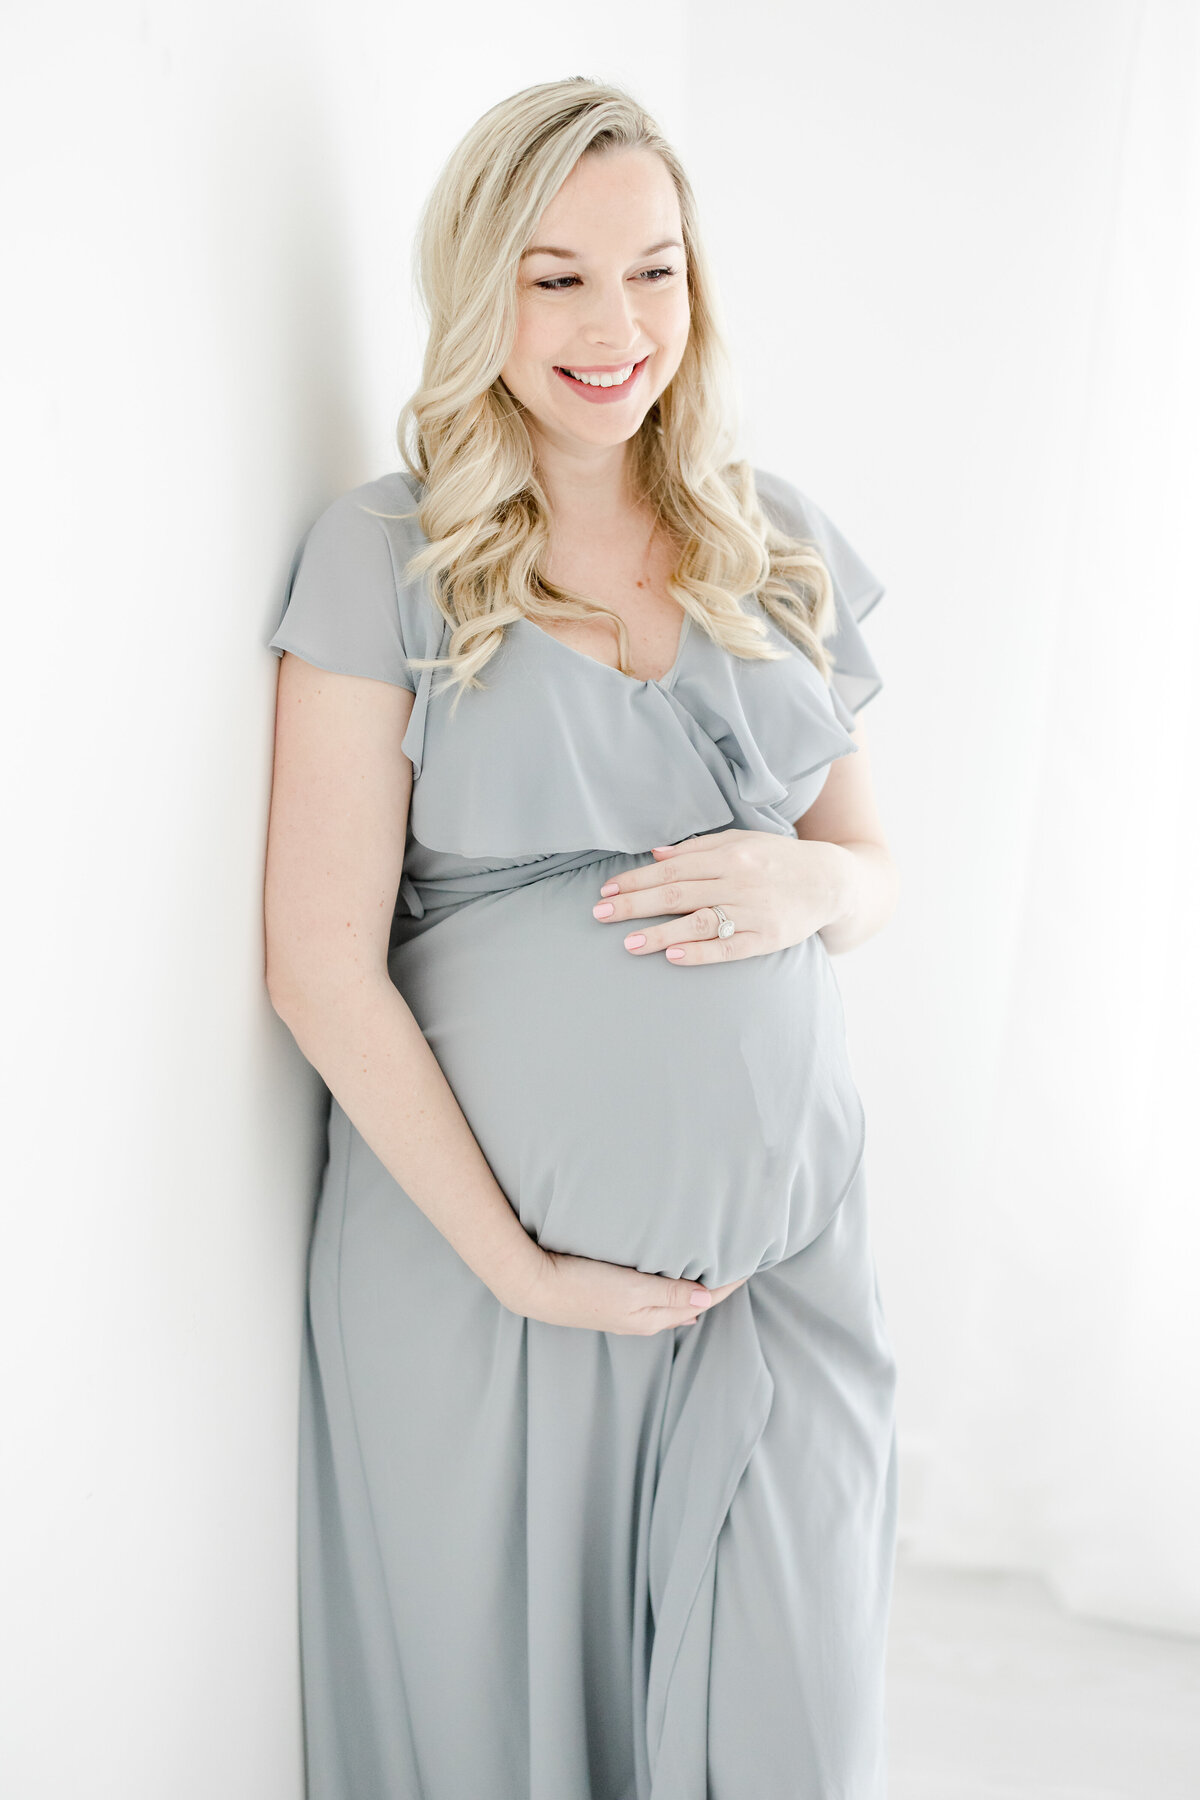 Westport CT Maternity Photographer - 35